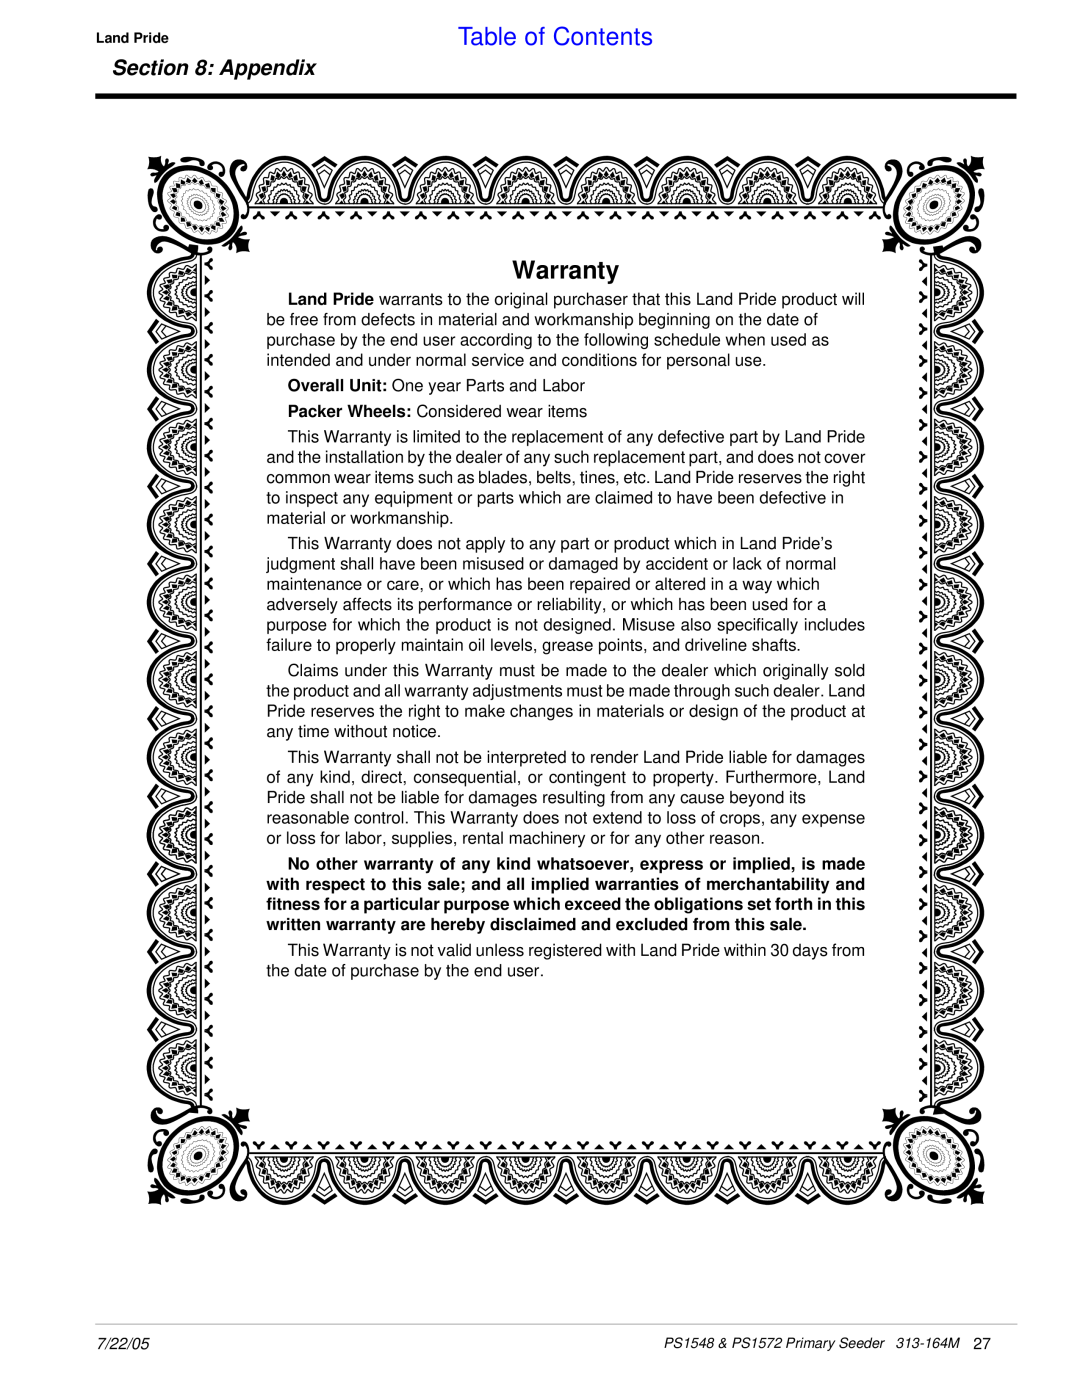 Land Pride PS1572, PS1548 manual Warranty, Table of Contents, Appendix 